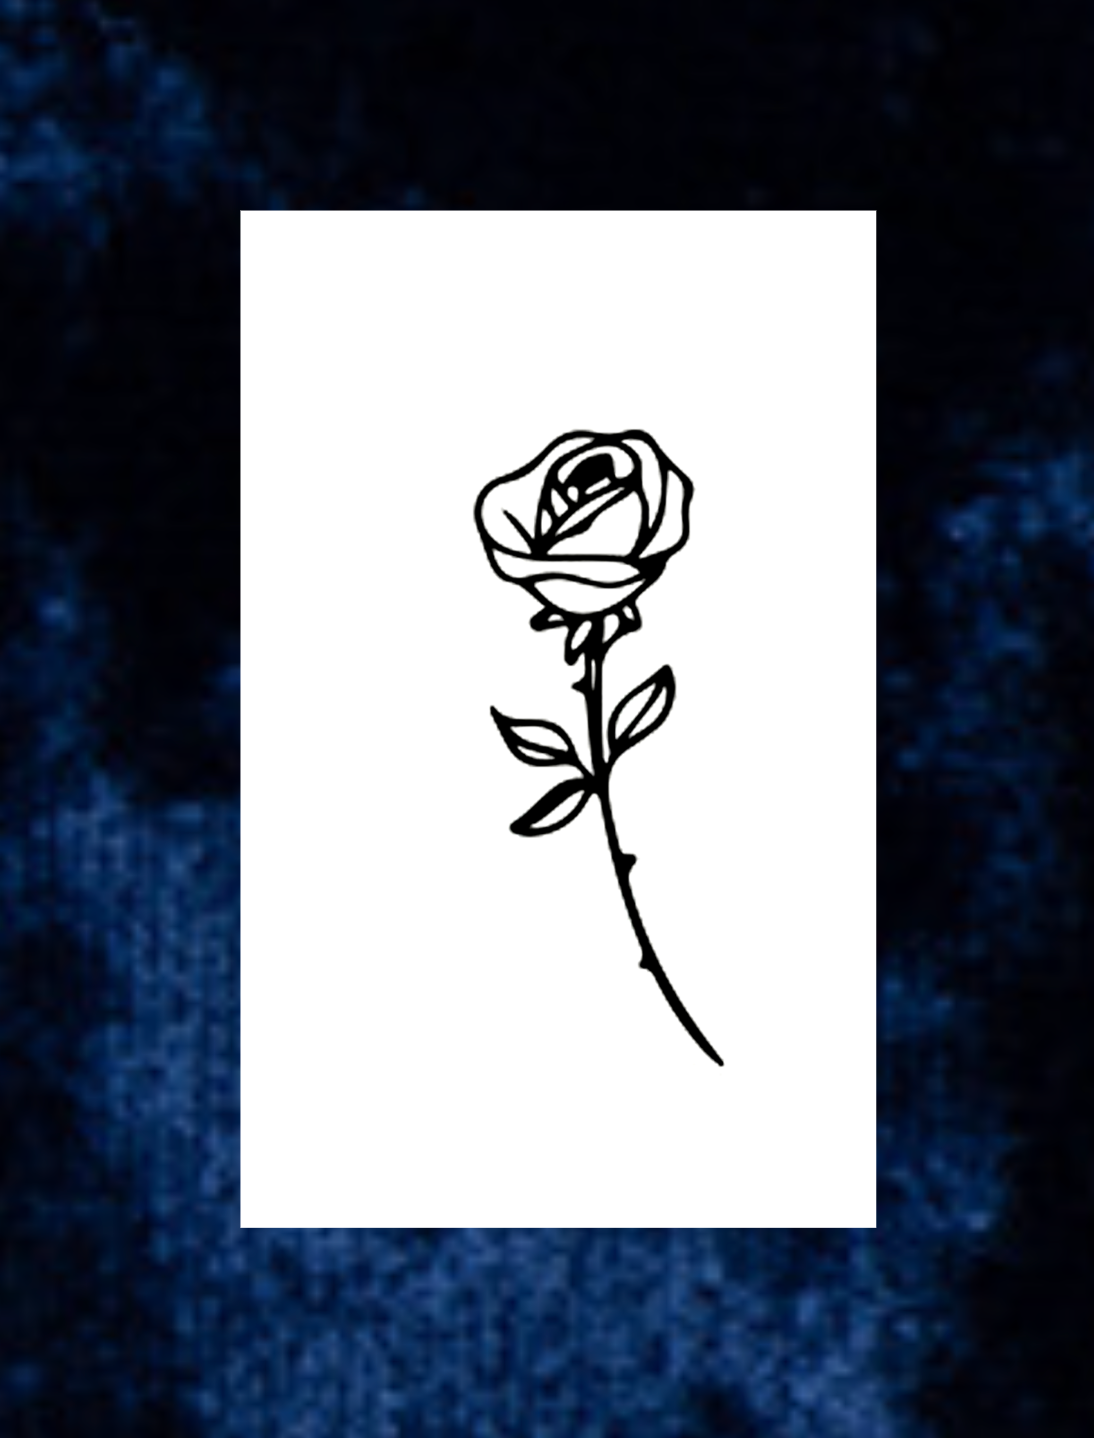 Rose Tattoo